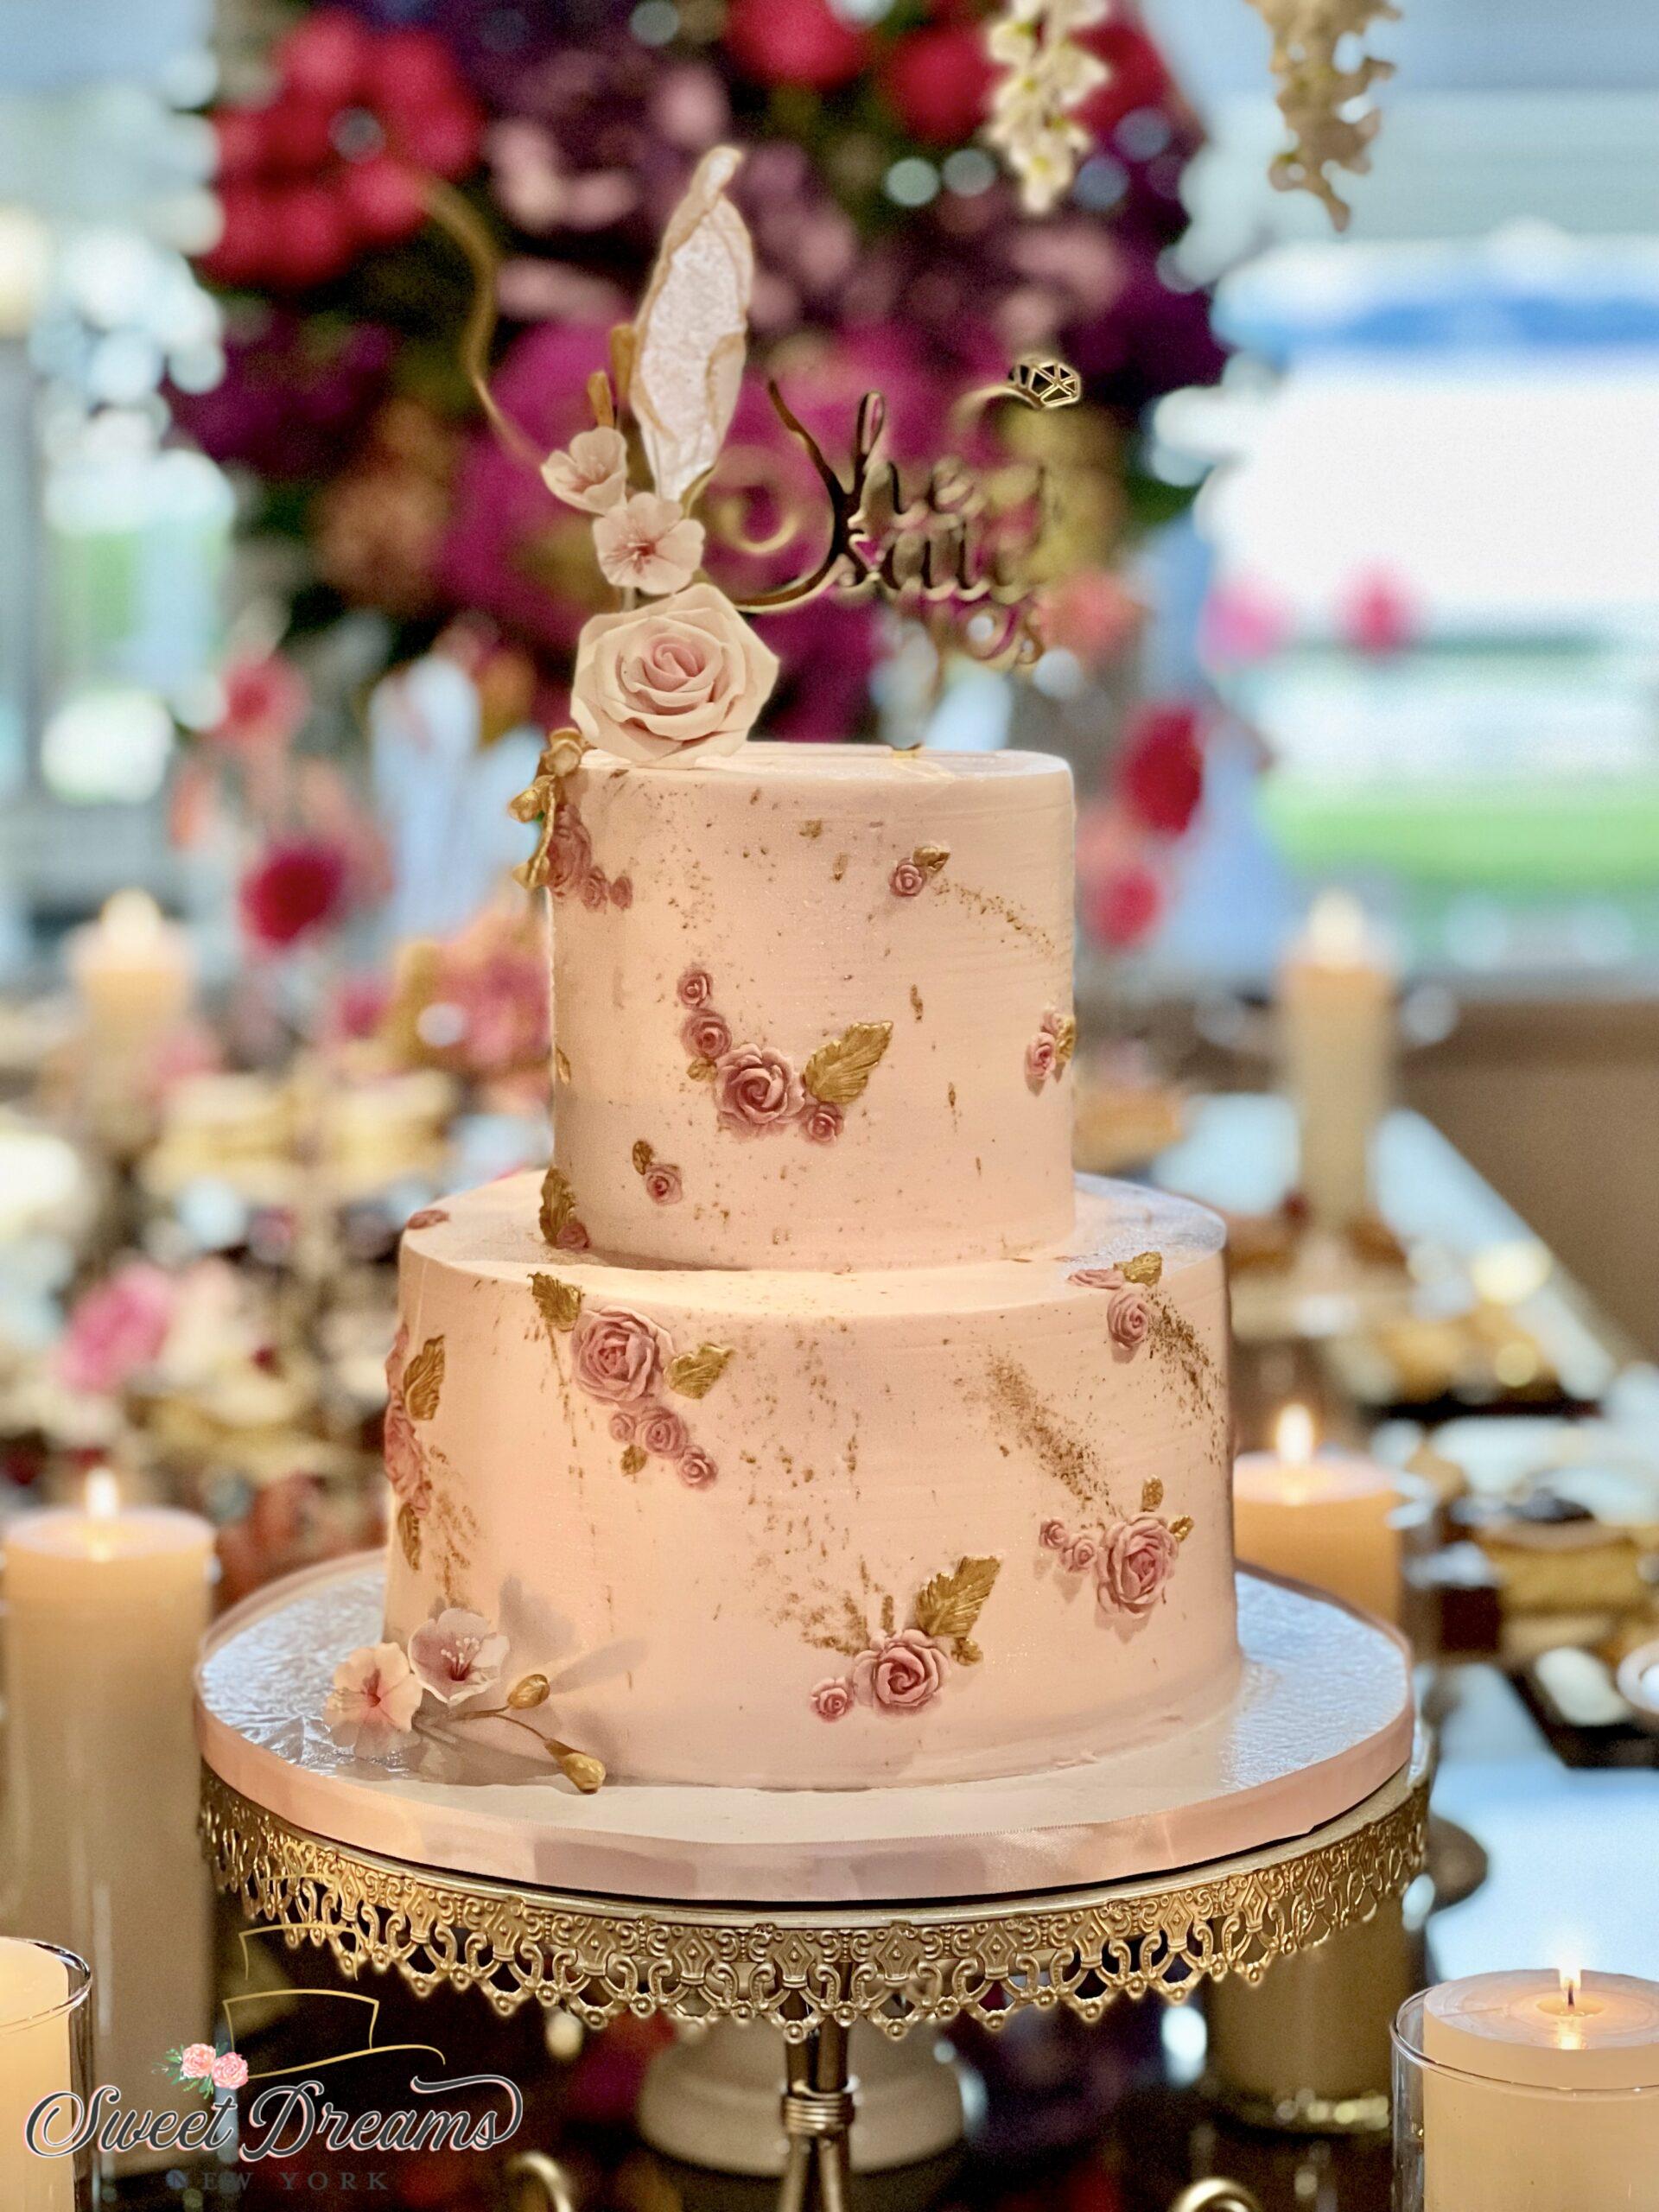 She Said Yes Cake Wedding Cake pink and gold flowers bridal shower cake Long Island NYC